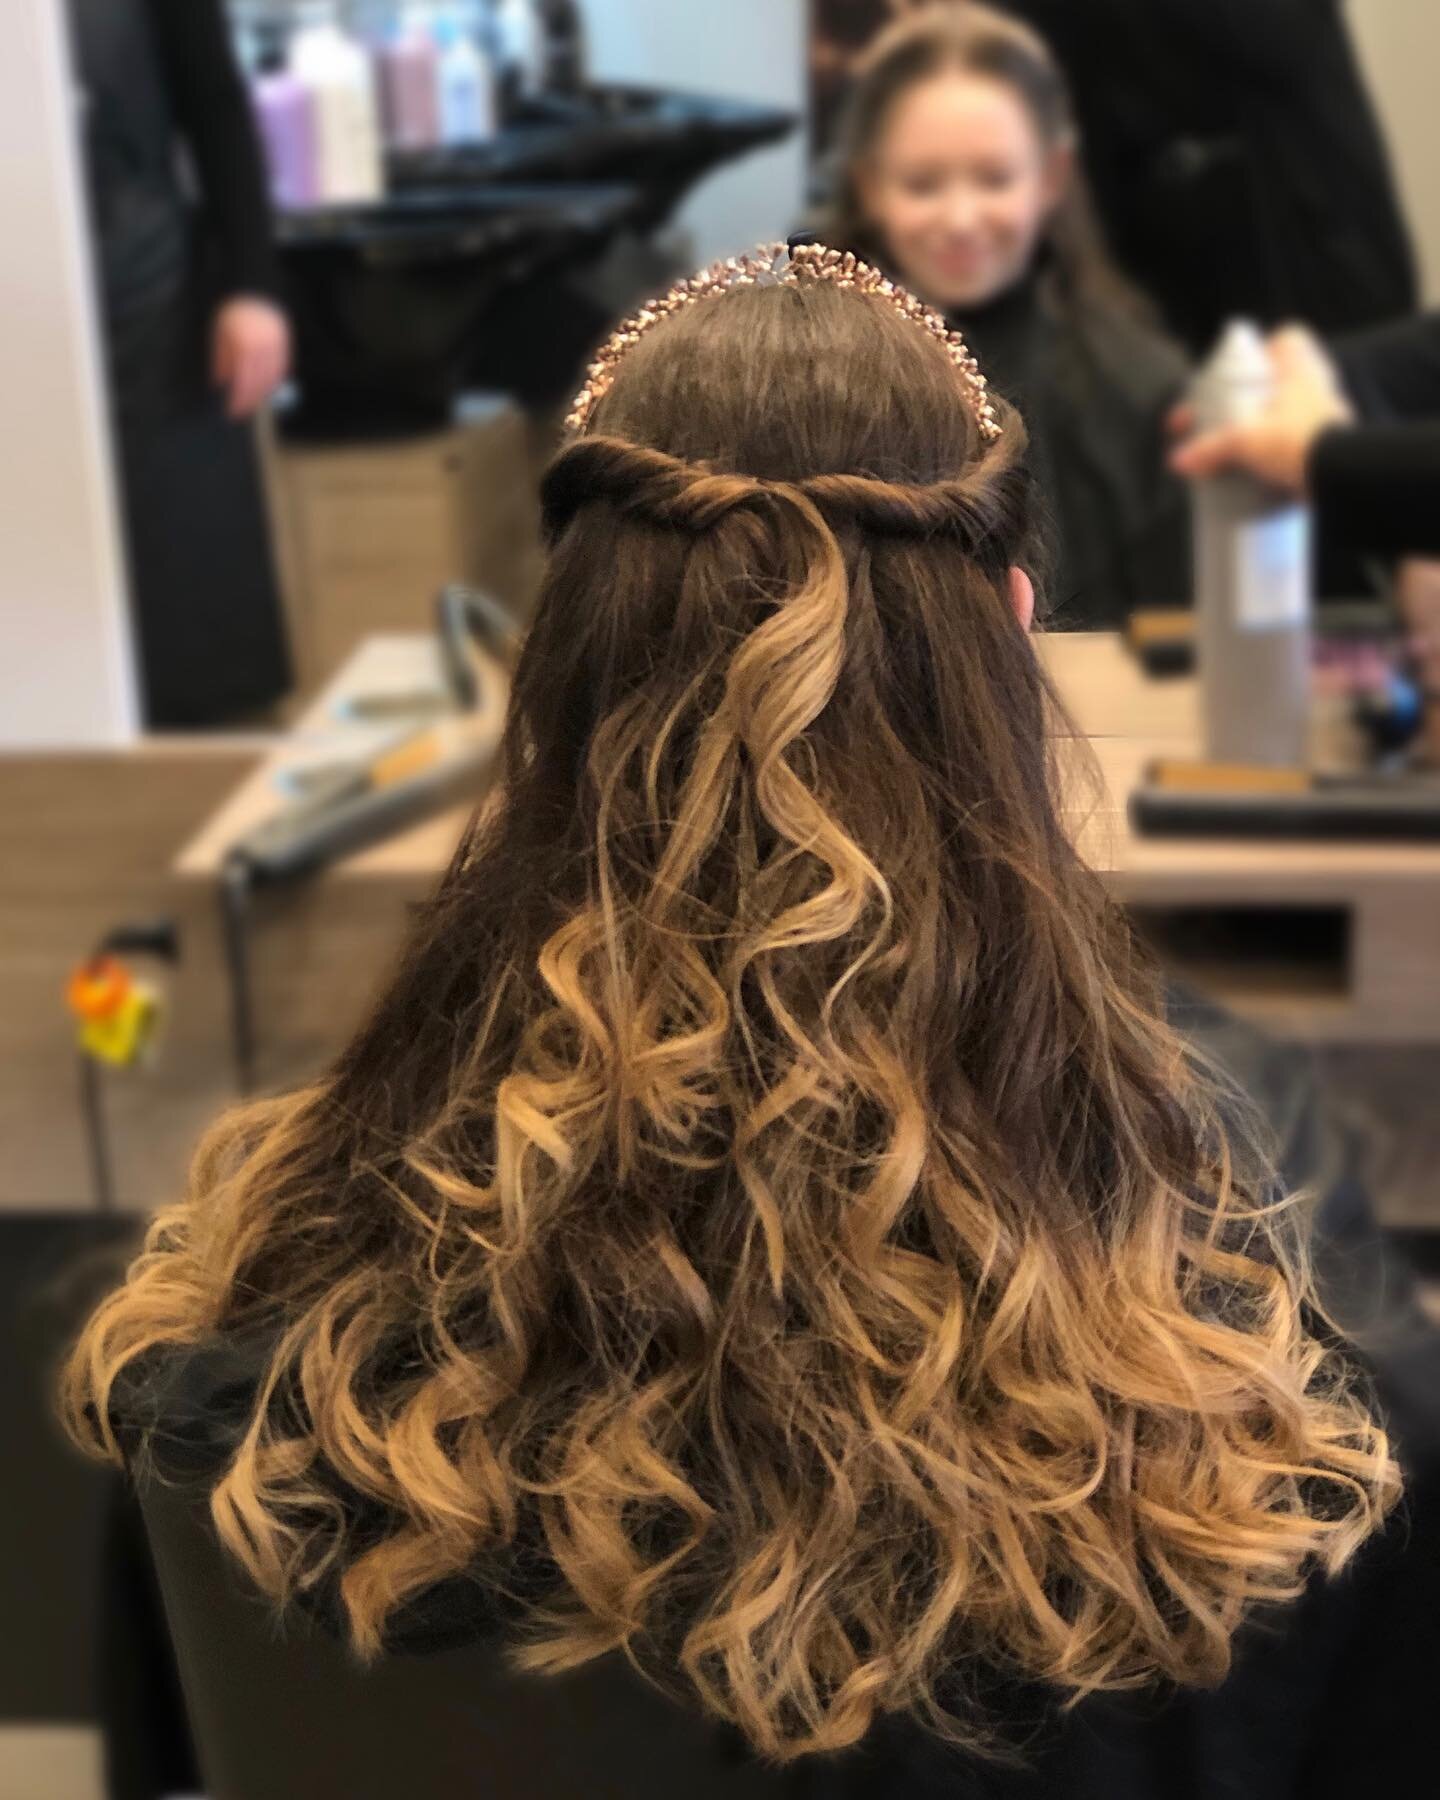 .
Gorgeous curls for this beautiful client on her formal day.

#formalseason #curledhair #tiaratime #ghdelitesalon #ghdcurls #lusciouslocks #adelaidehairdresser #adelaidehairsalon #frewville #axishairandbeauty